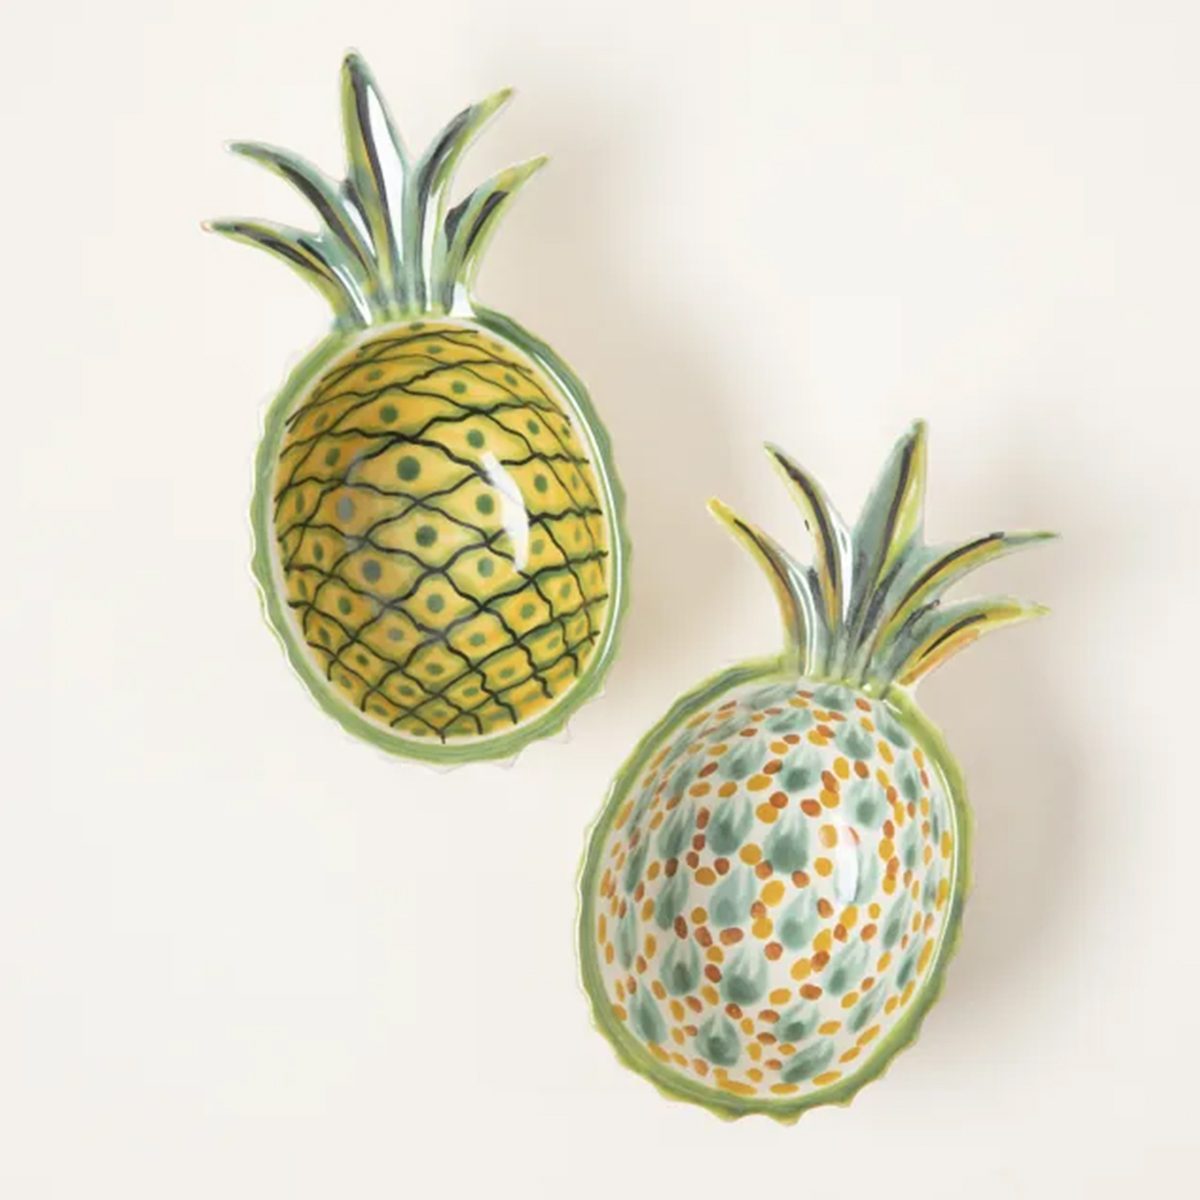 Pineapple Bowls Ecomm Via Uncommongoods.com